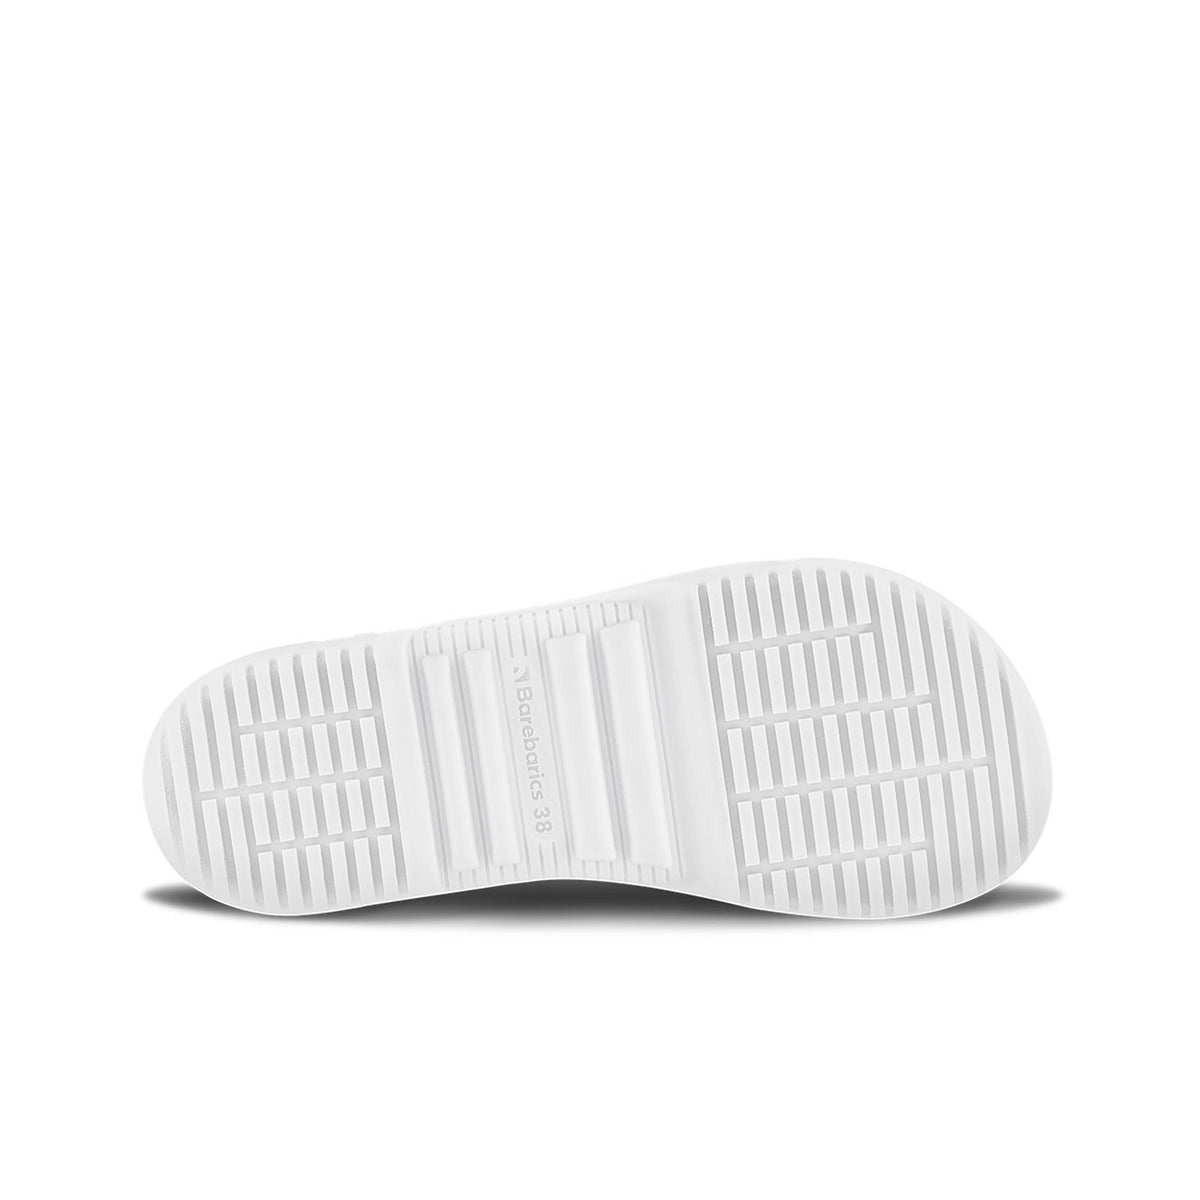 Barefoot Sneakers Barebarics Zing - High Top - Black & White - Leather 6  - OzBarefoot